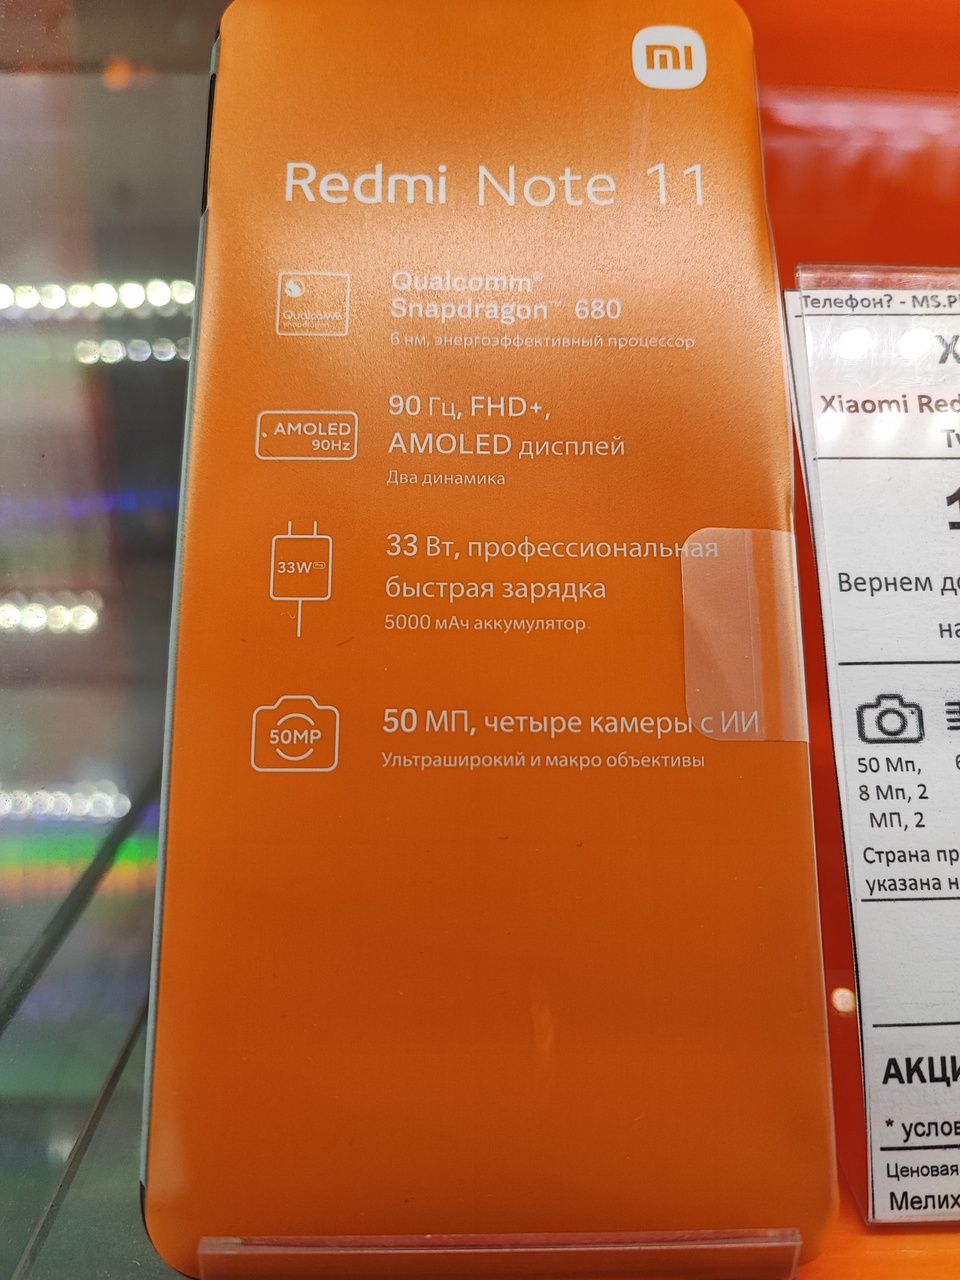 Xiaomi redmi note 11 - 19 990 ₽, заказать онлайн.